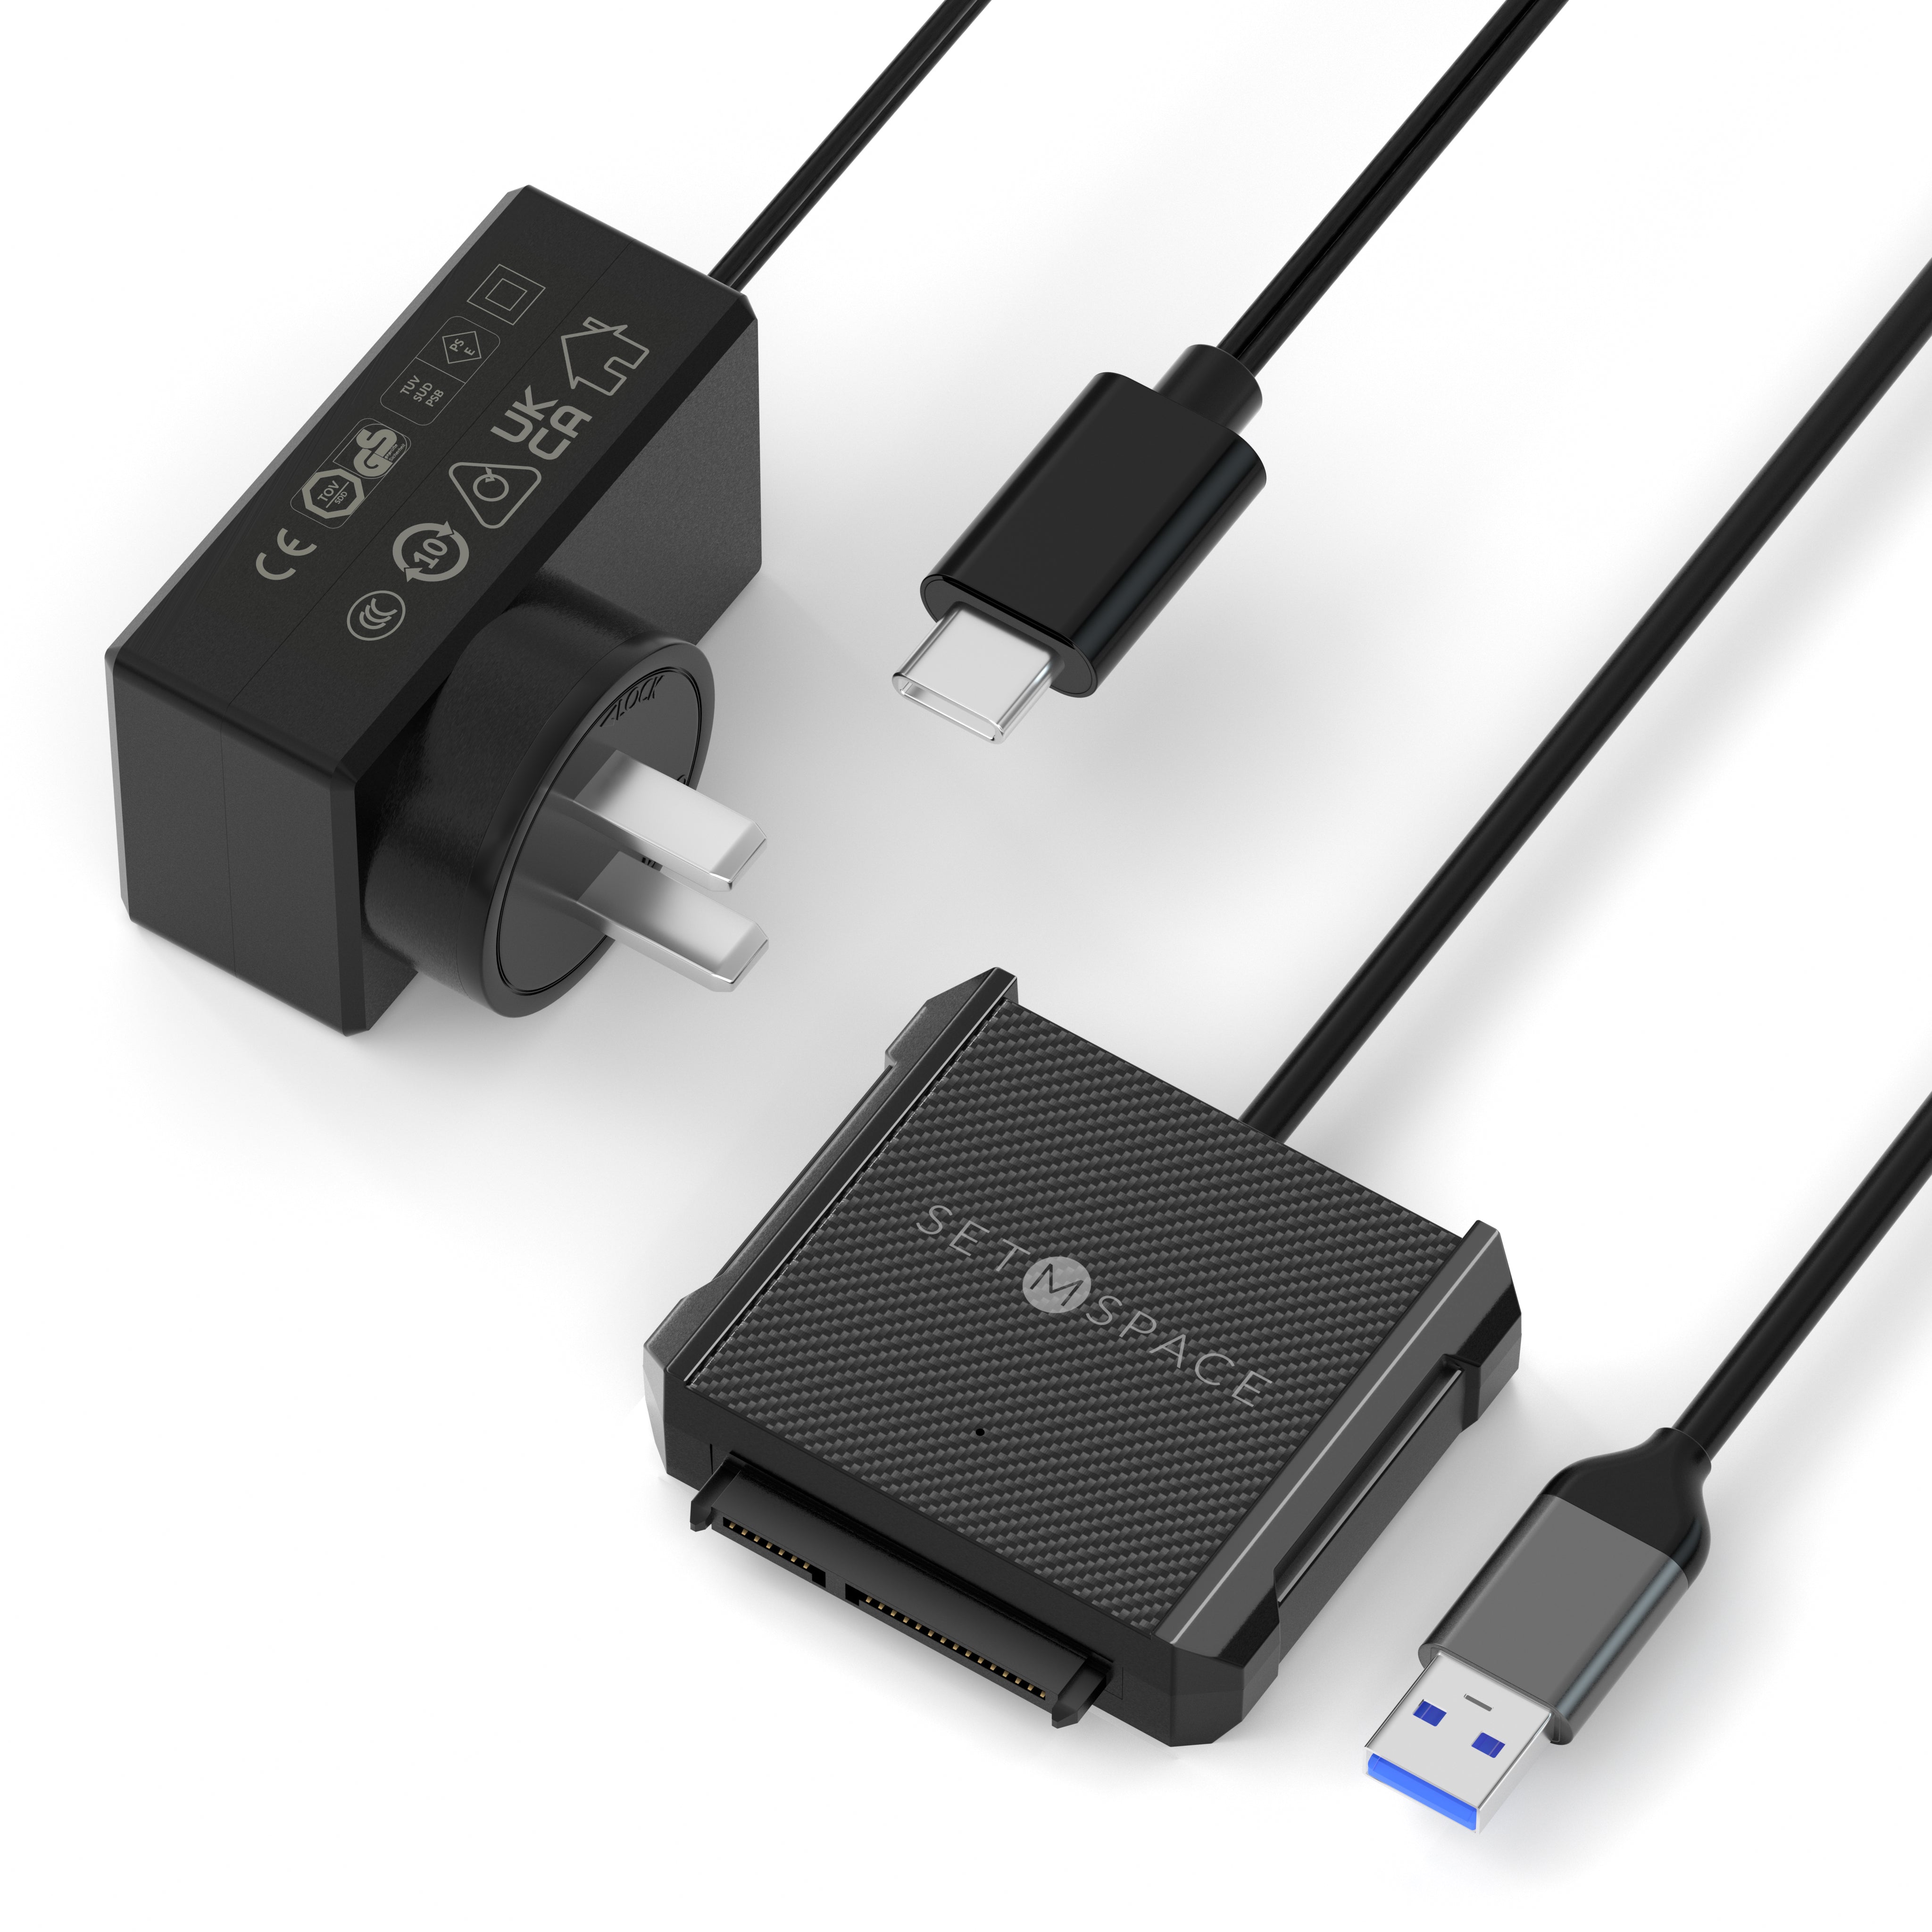 USB 3.0 Vers SATA 3 Cable Sata Câbles USB Convertir Adaptateur 2.5